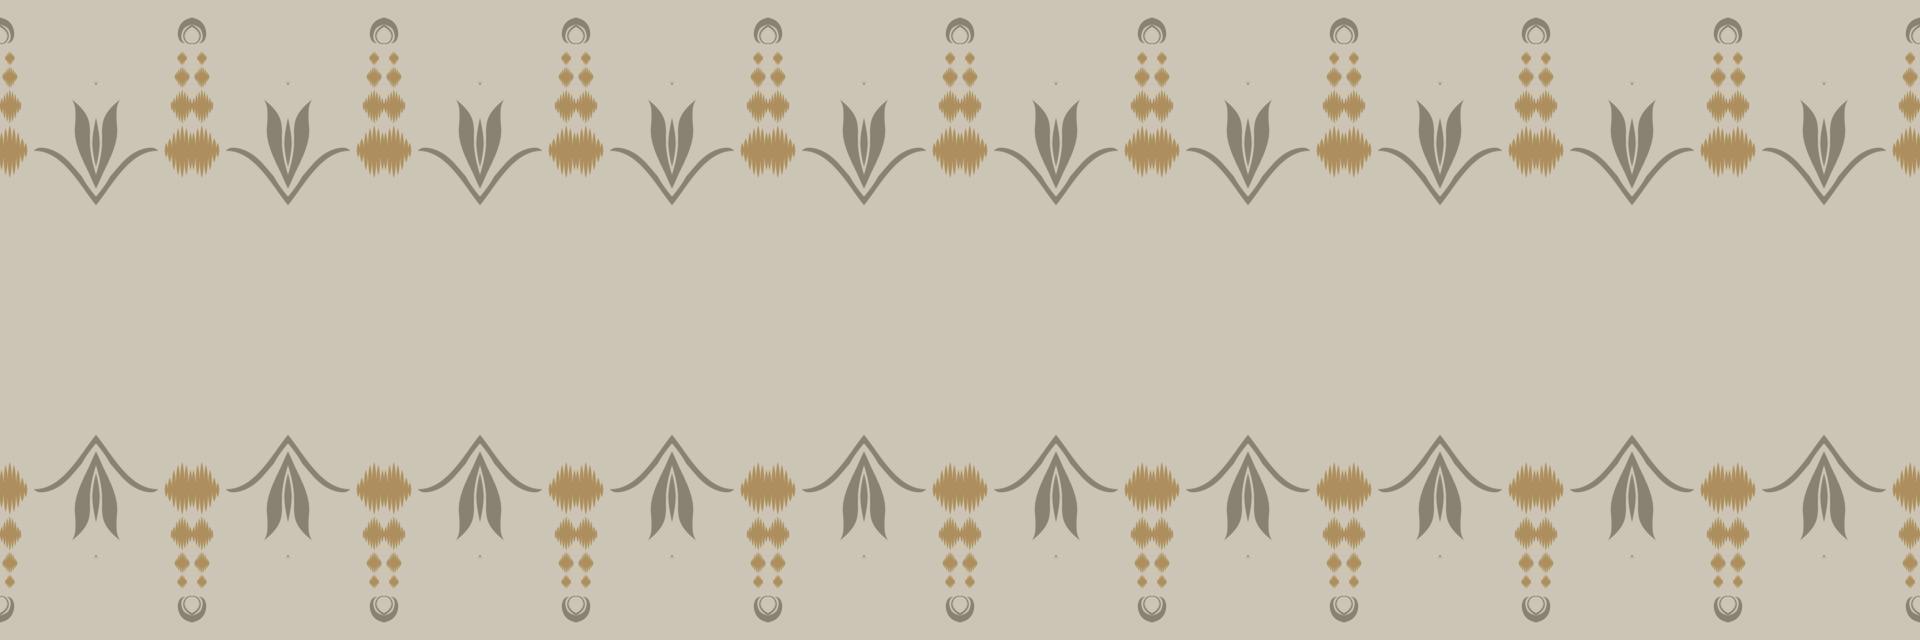 ikat prickar stam- sparre sömlös mönster. etnisk geometrisk batik ikkat digital vektor textil- design för grafik tyg saree mughal borsta symbol strängar textur kurti kurtis kurtas